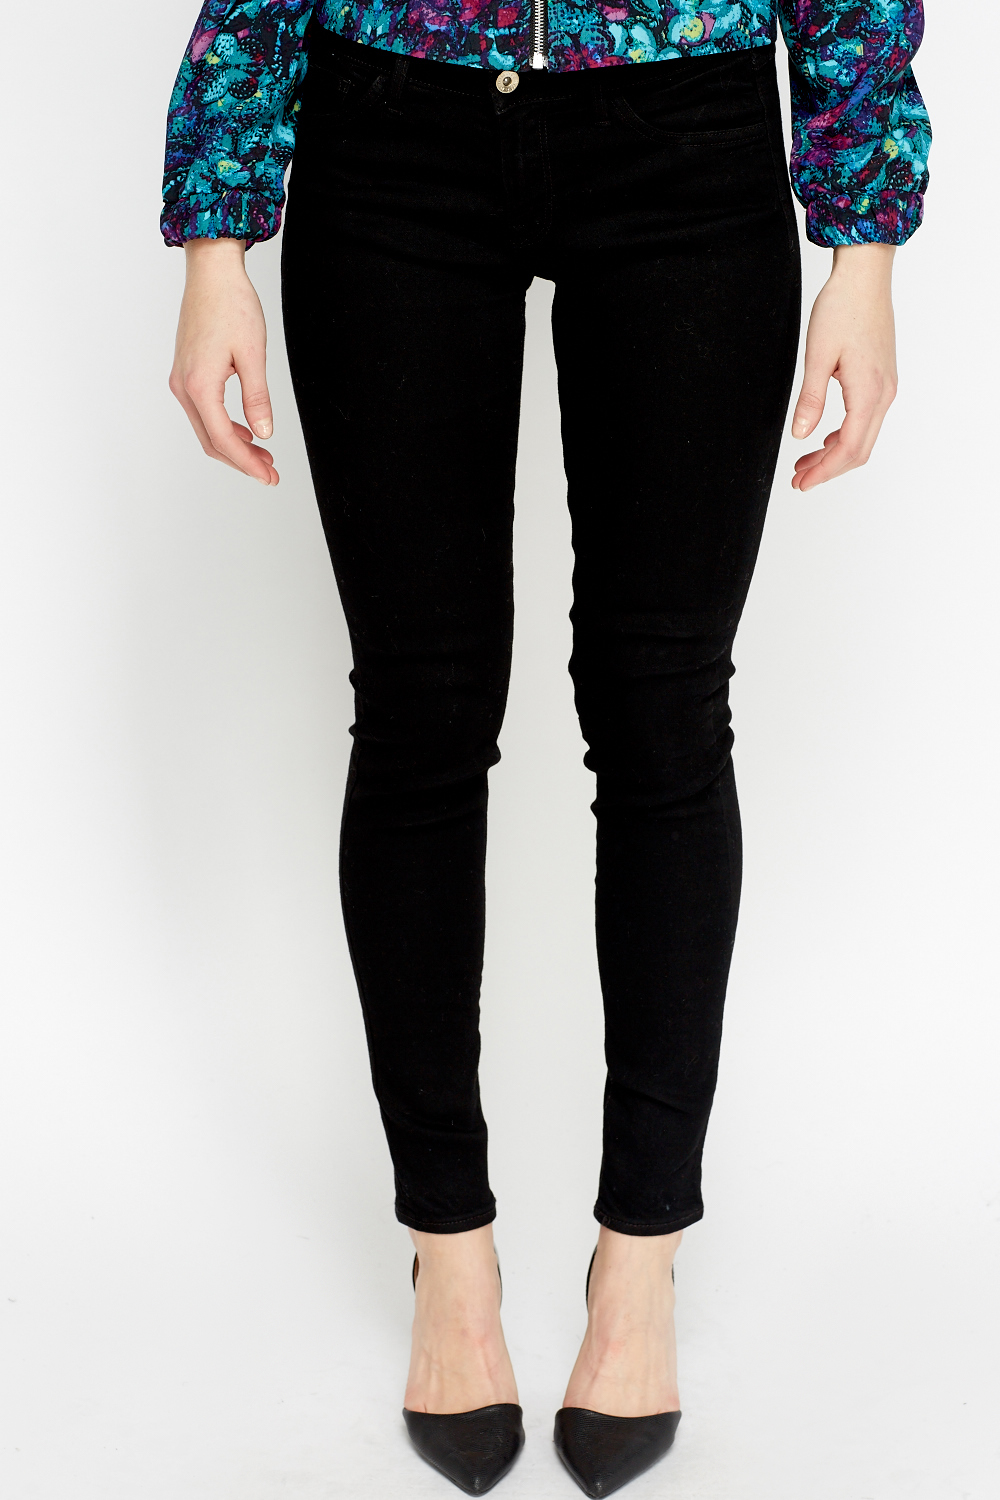 Black Skinny Jeans - Just $7